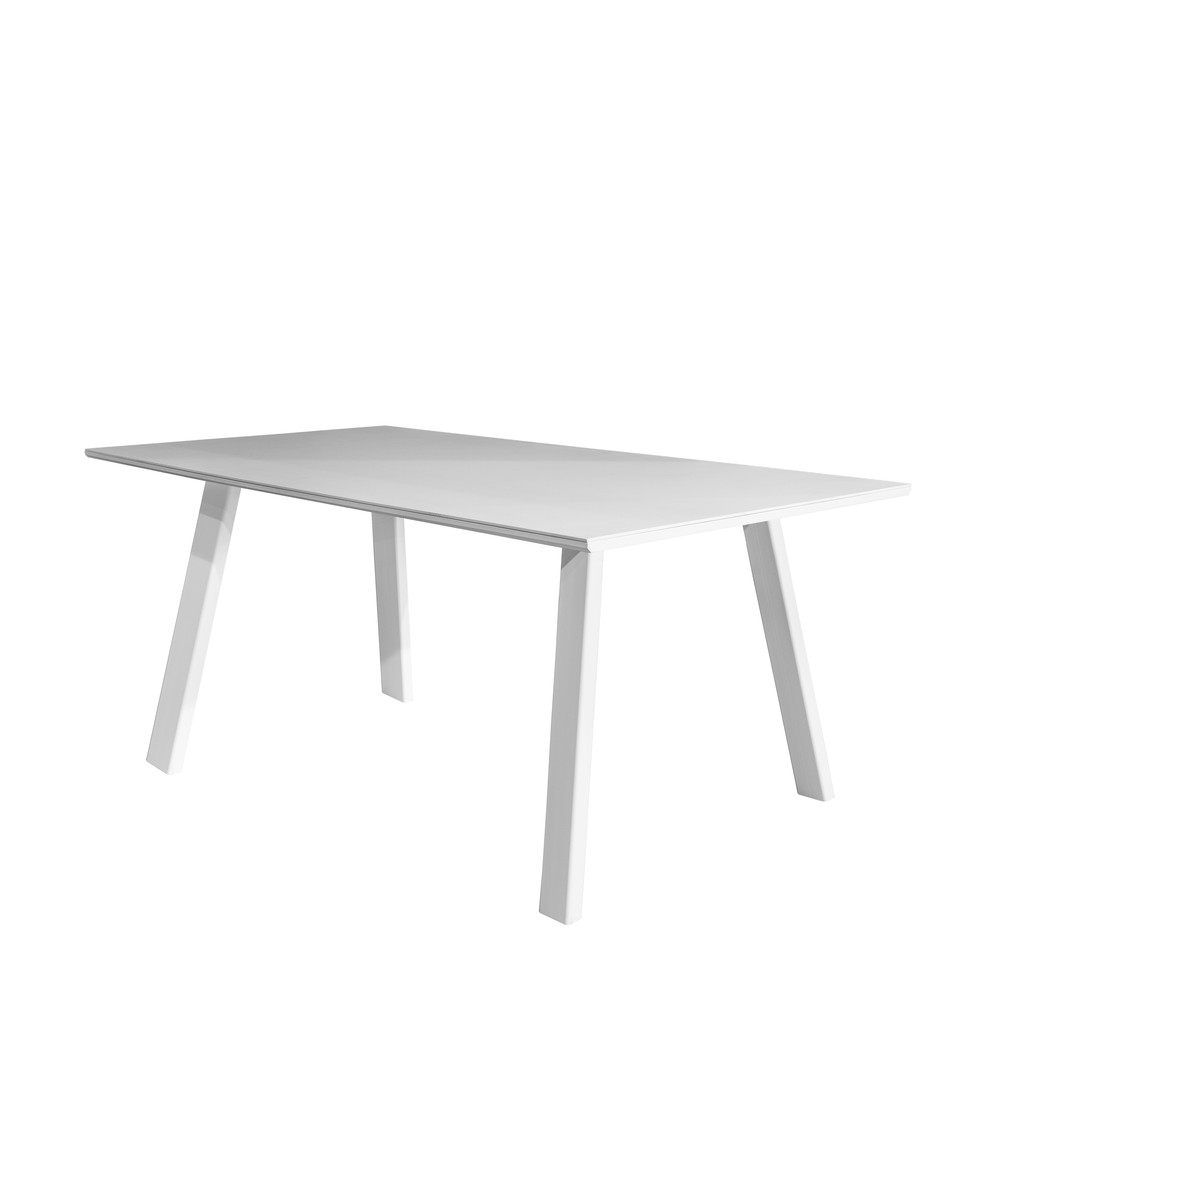   Table Spisa T03 Chic rectangle  140x100x75cm